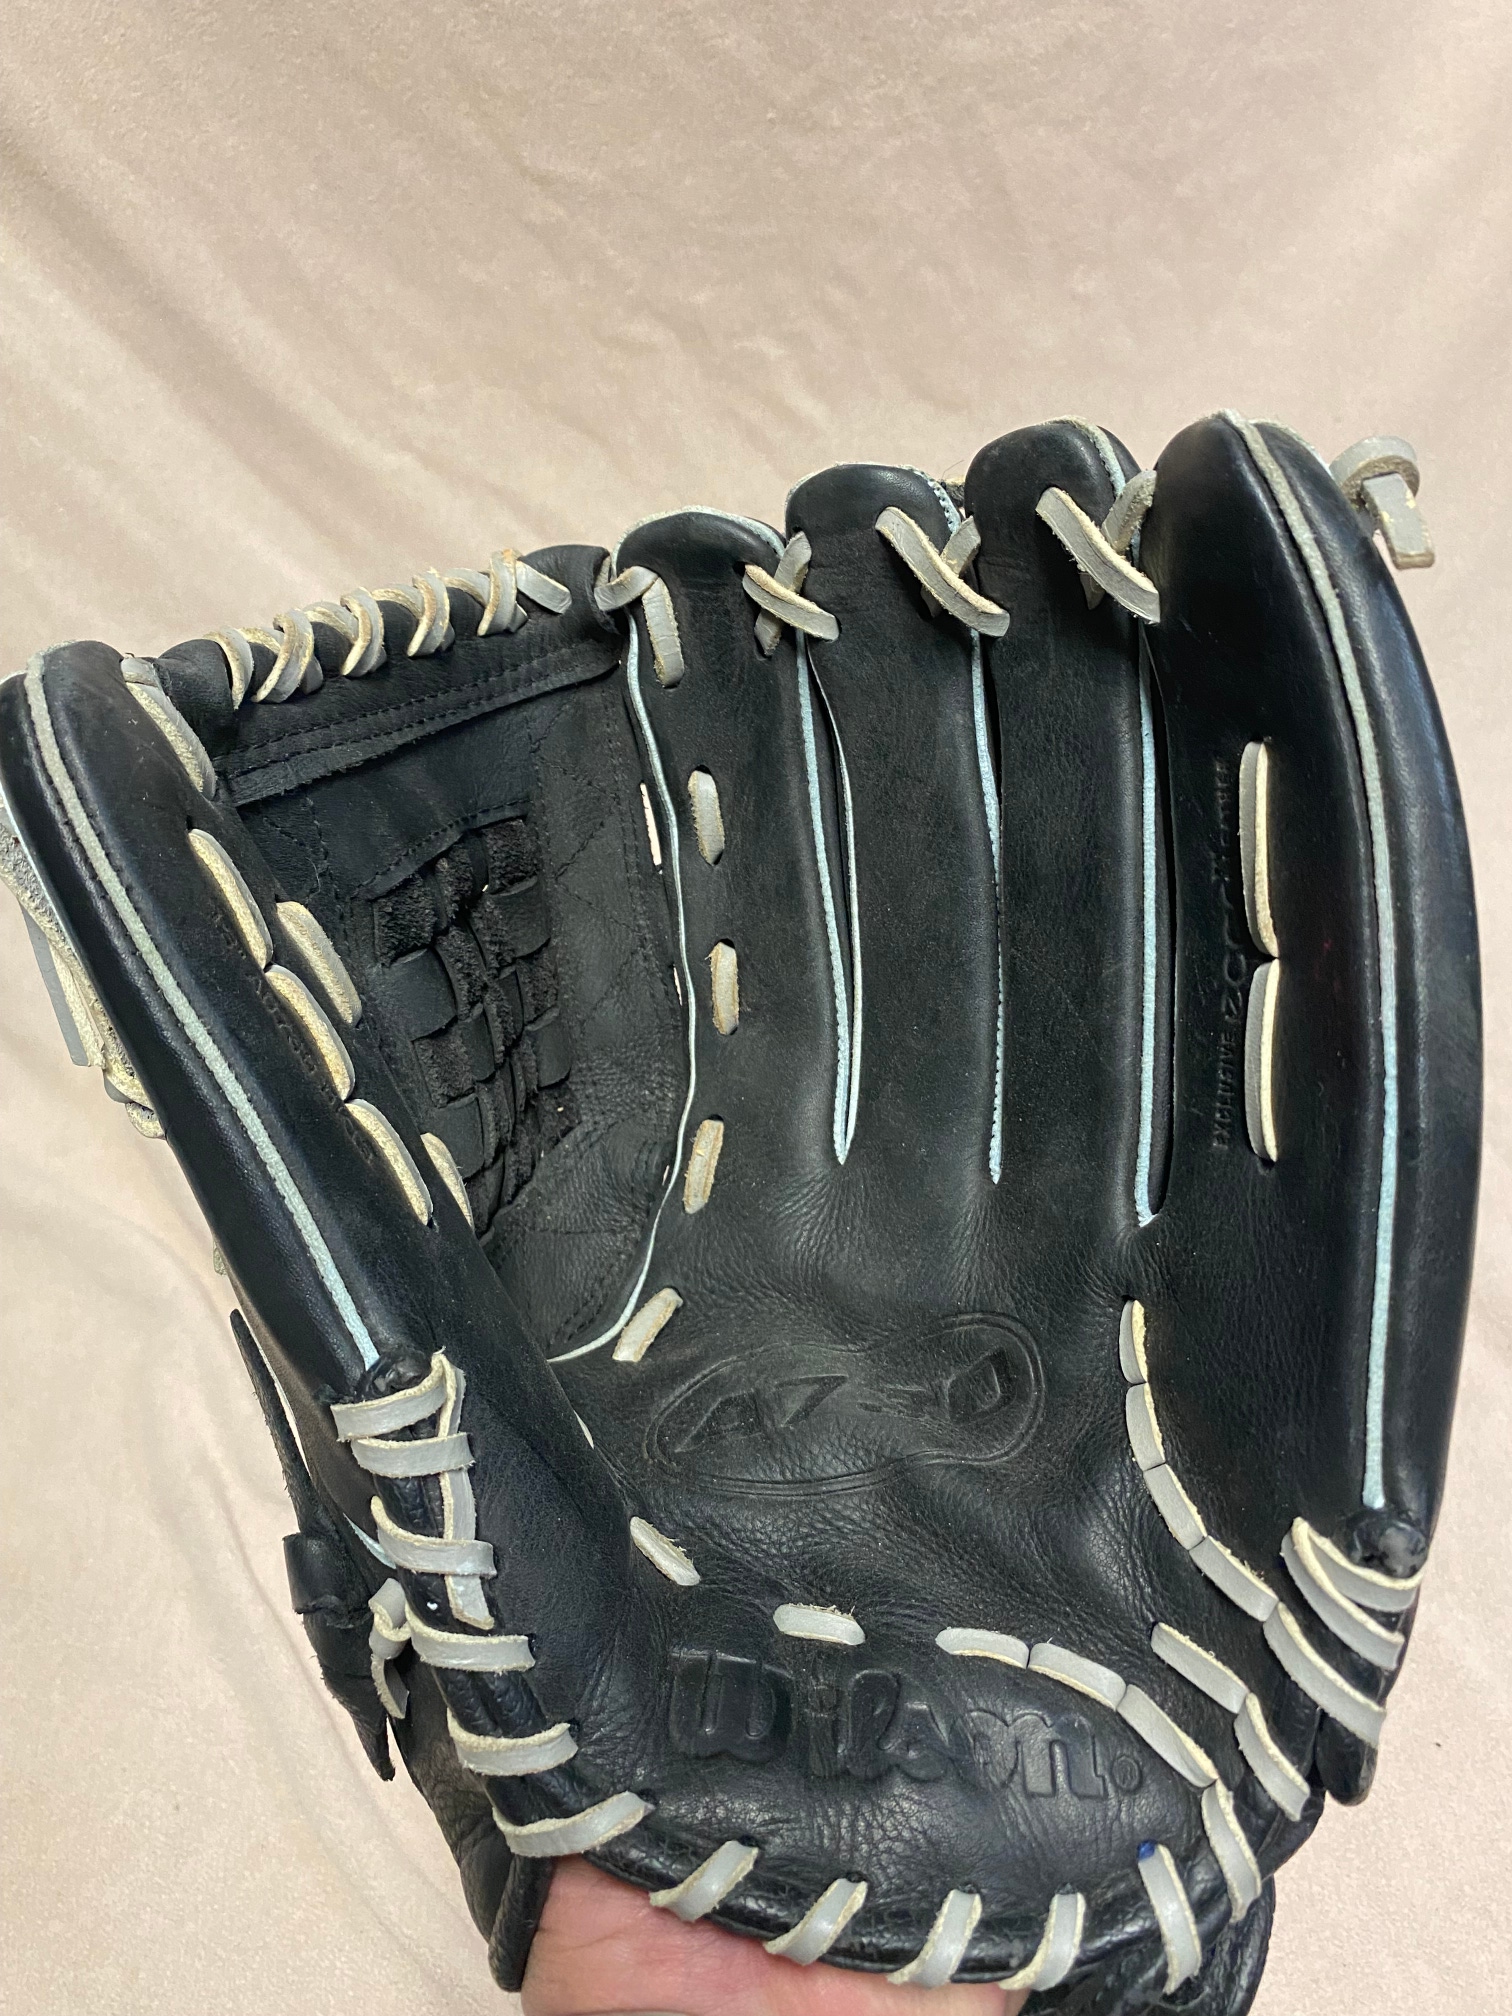 Used Right Hand Throw Wilson A730 Baseball Glove 13"